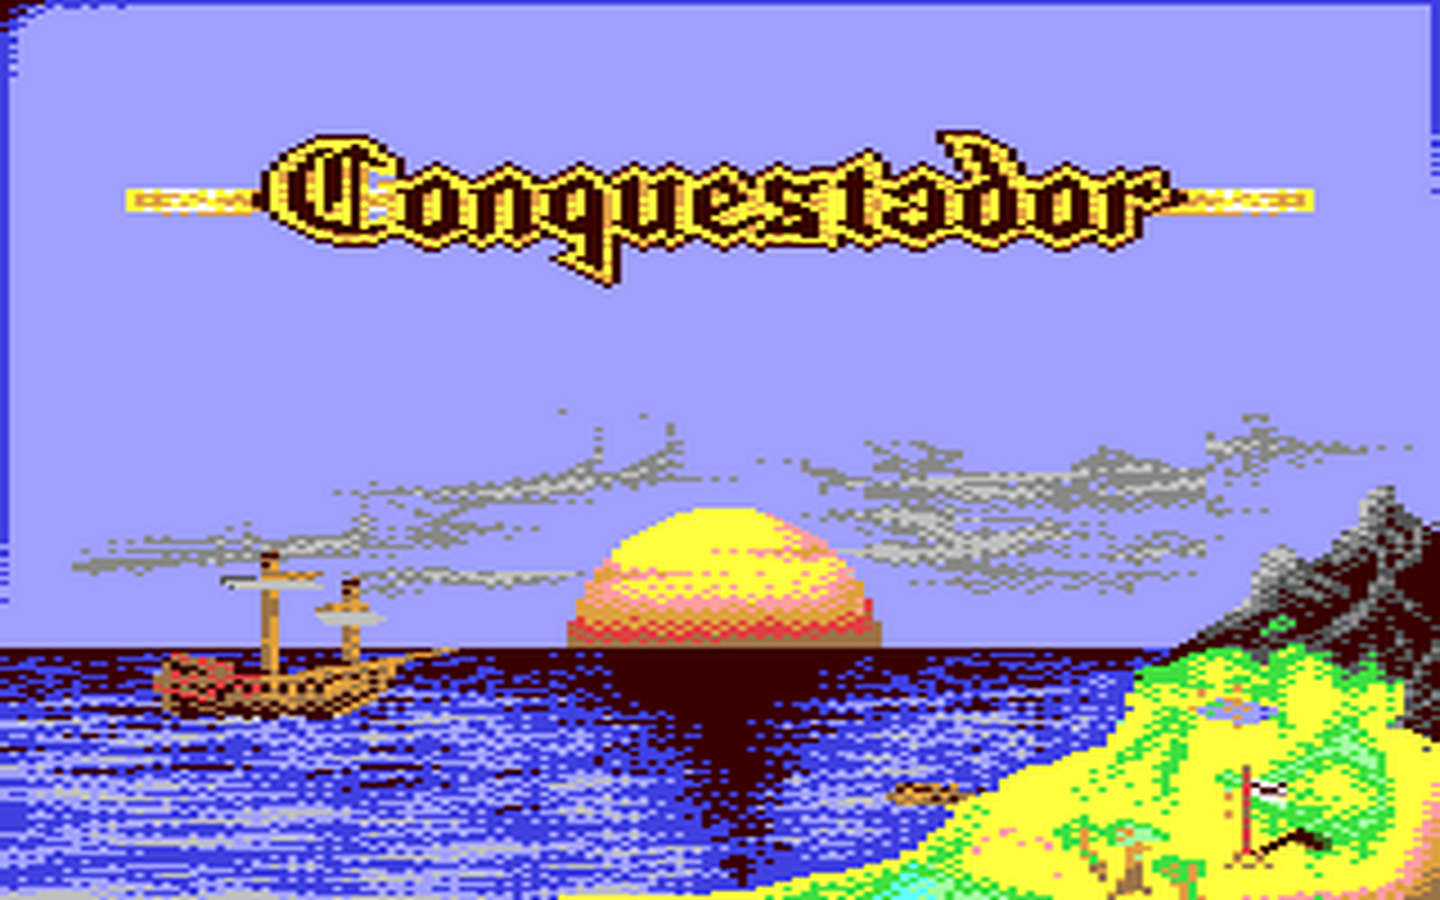 C64 GameBase Conquestador (Not_Published) 1991